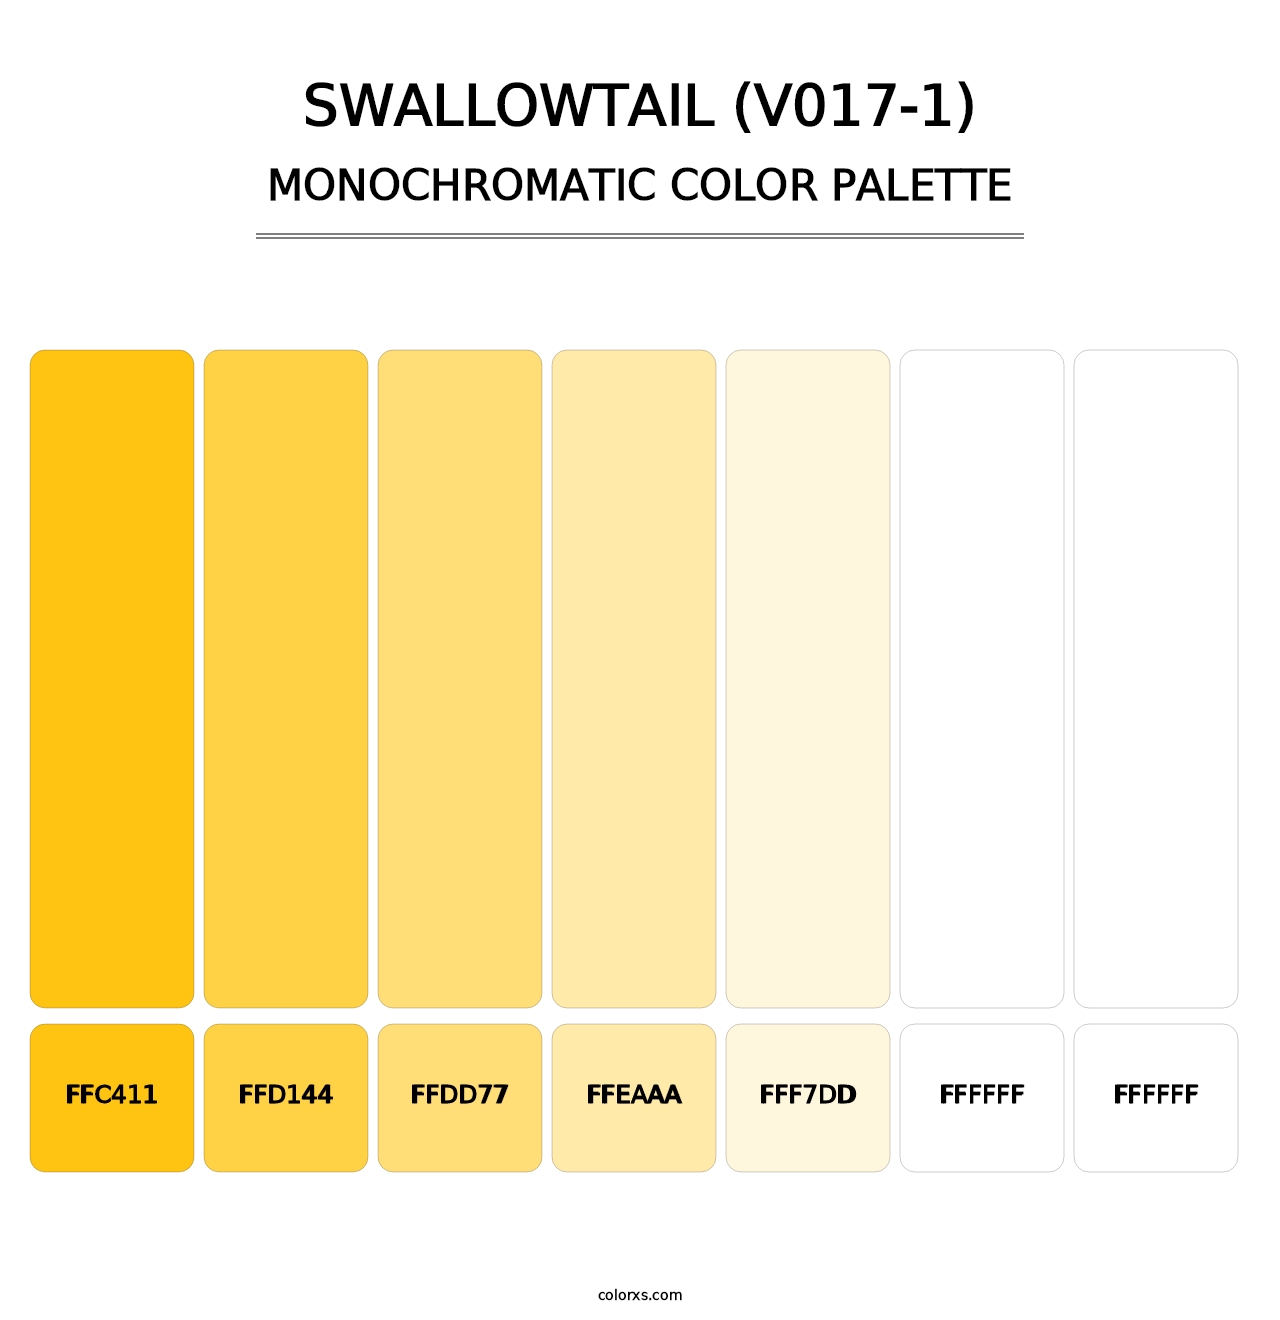 Swallowtail (V017-1) - Monochromatic Color Palette